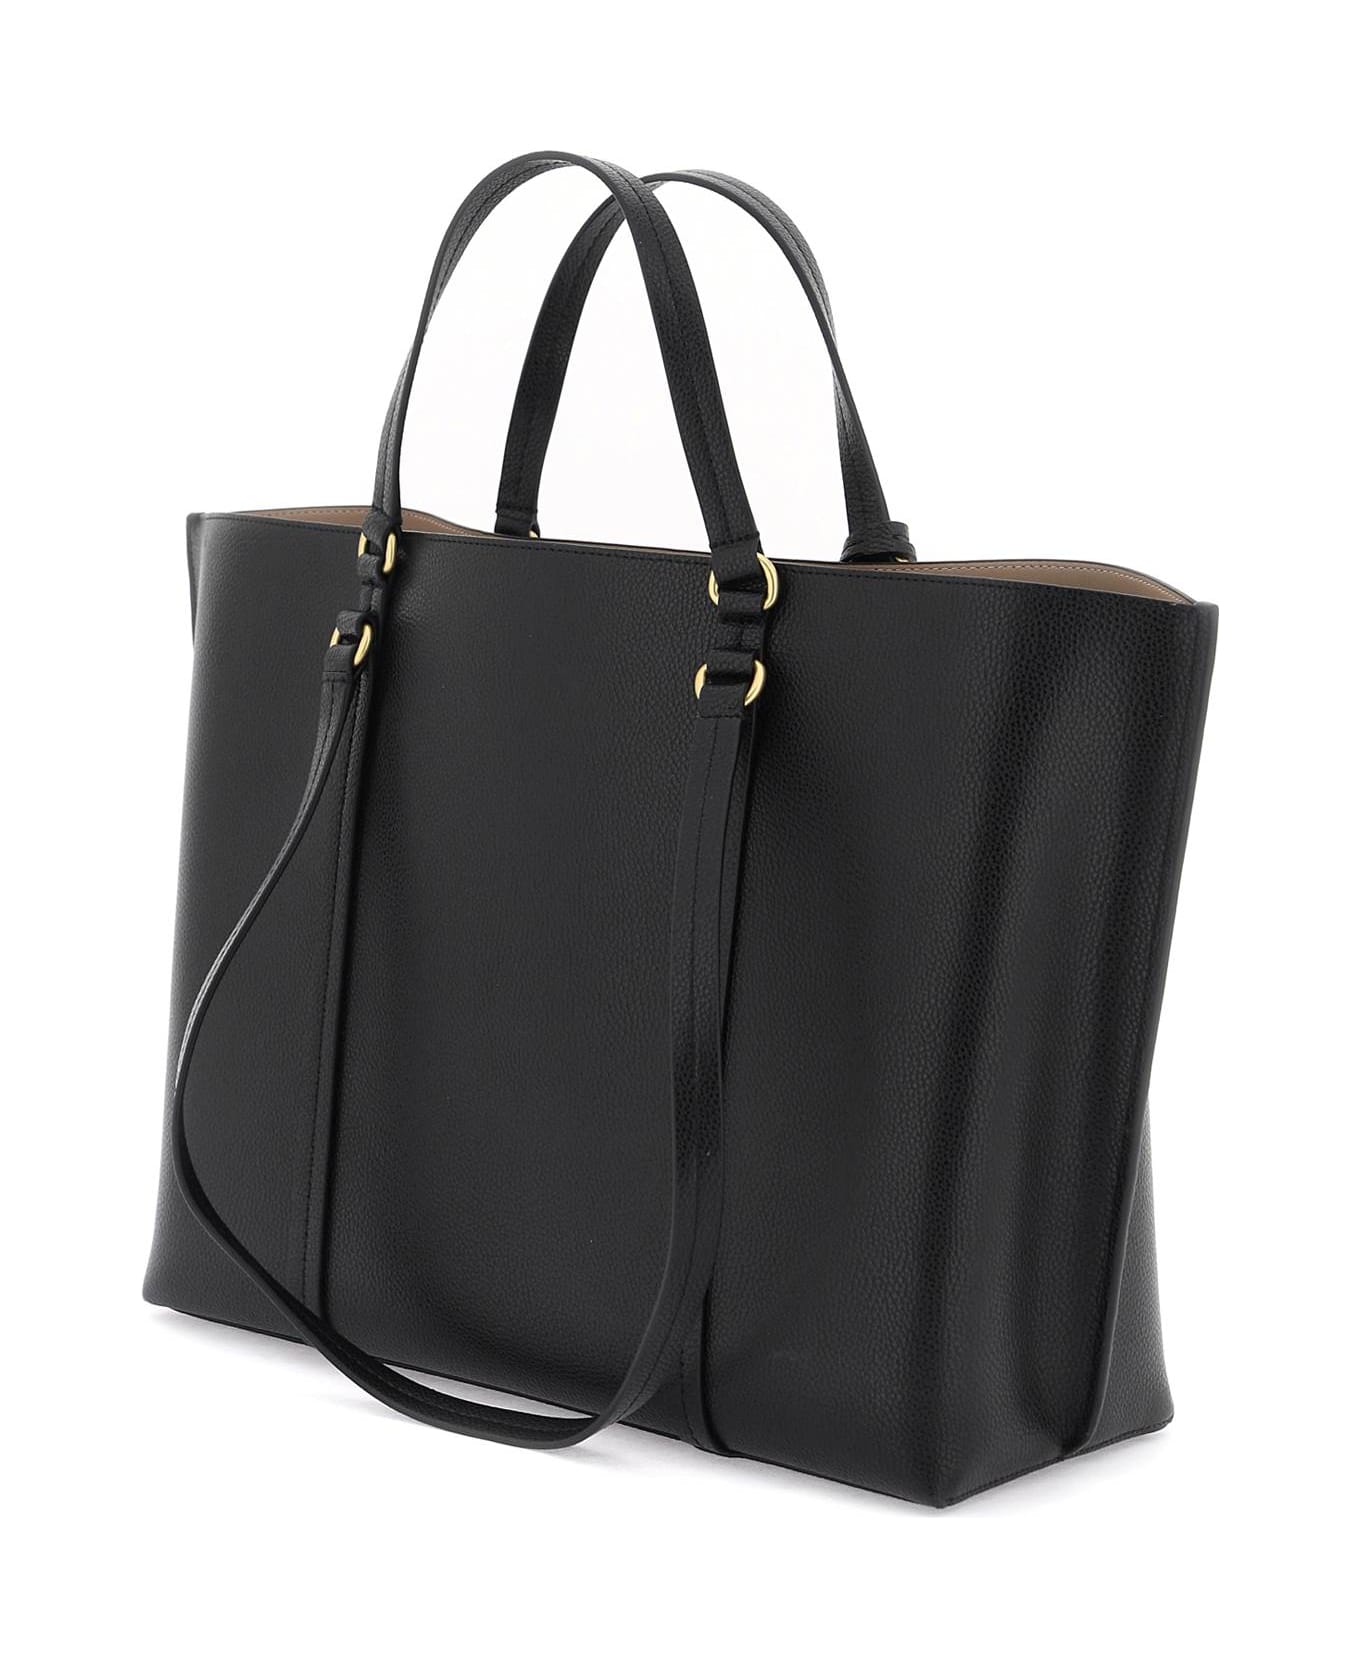 Pinko Large Leather Shopper Bag - NERO ANTIQUE GOLD (Black)